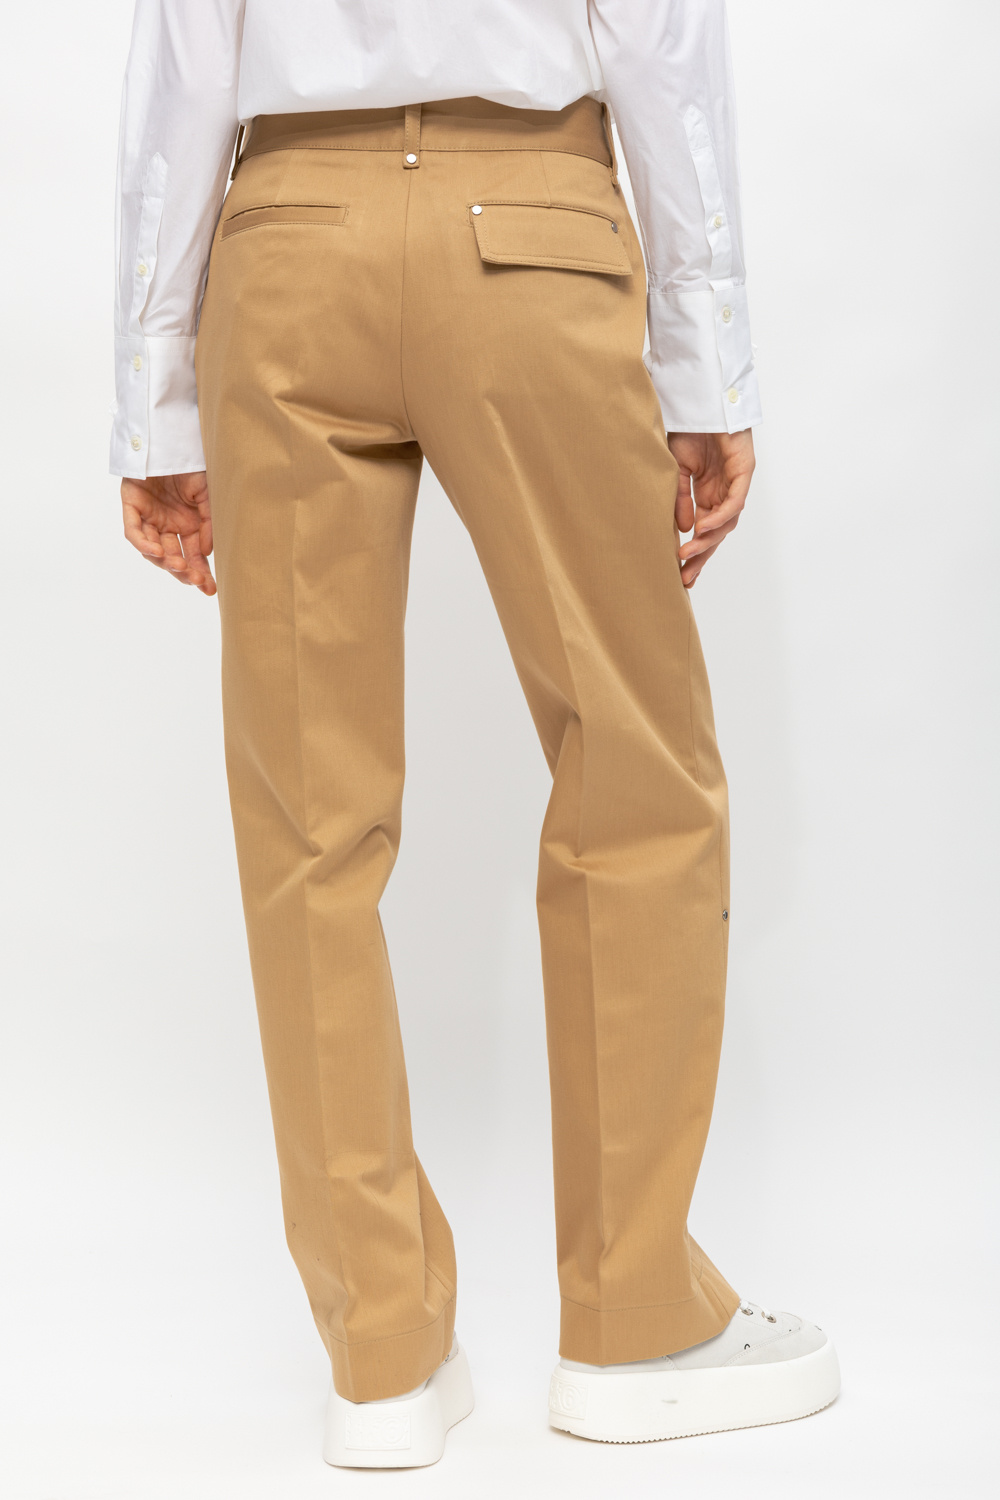 JW Anderson Pleat-front Slinky trousers